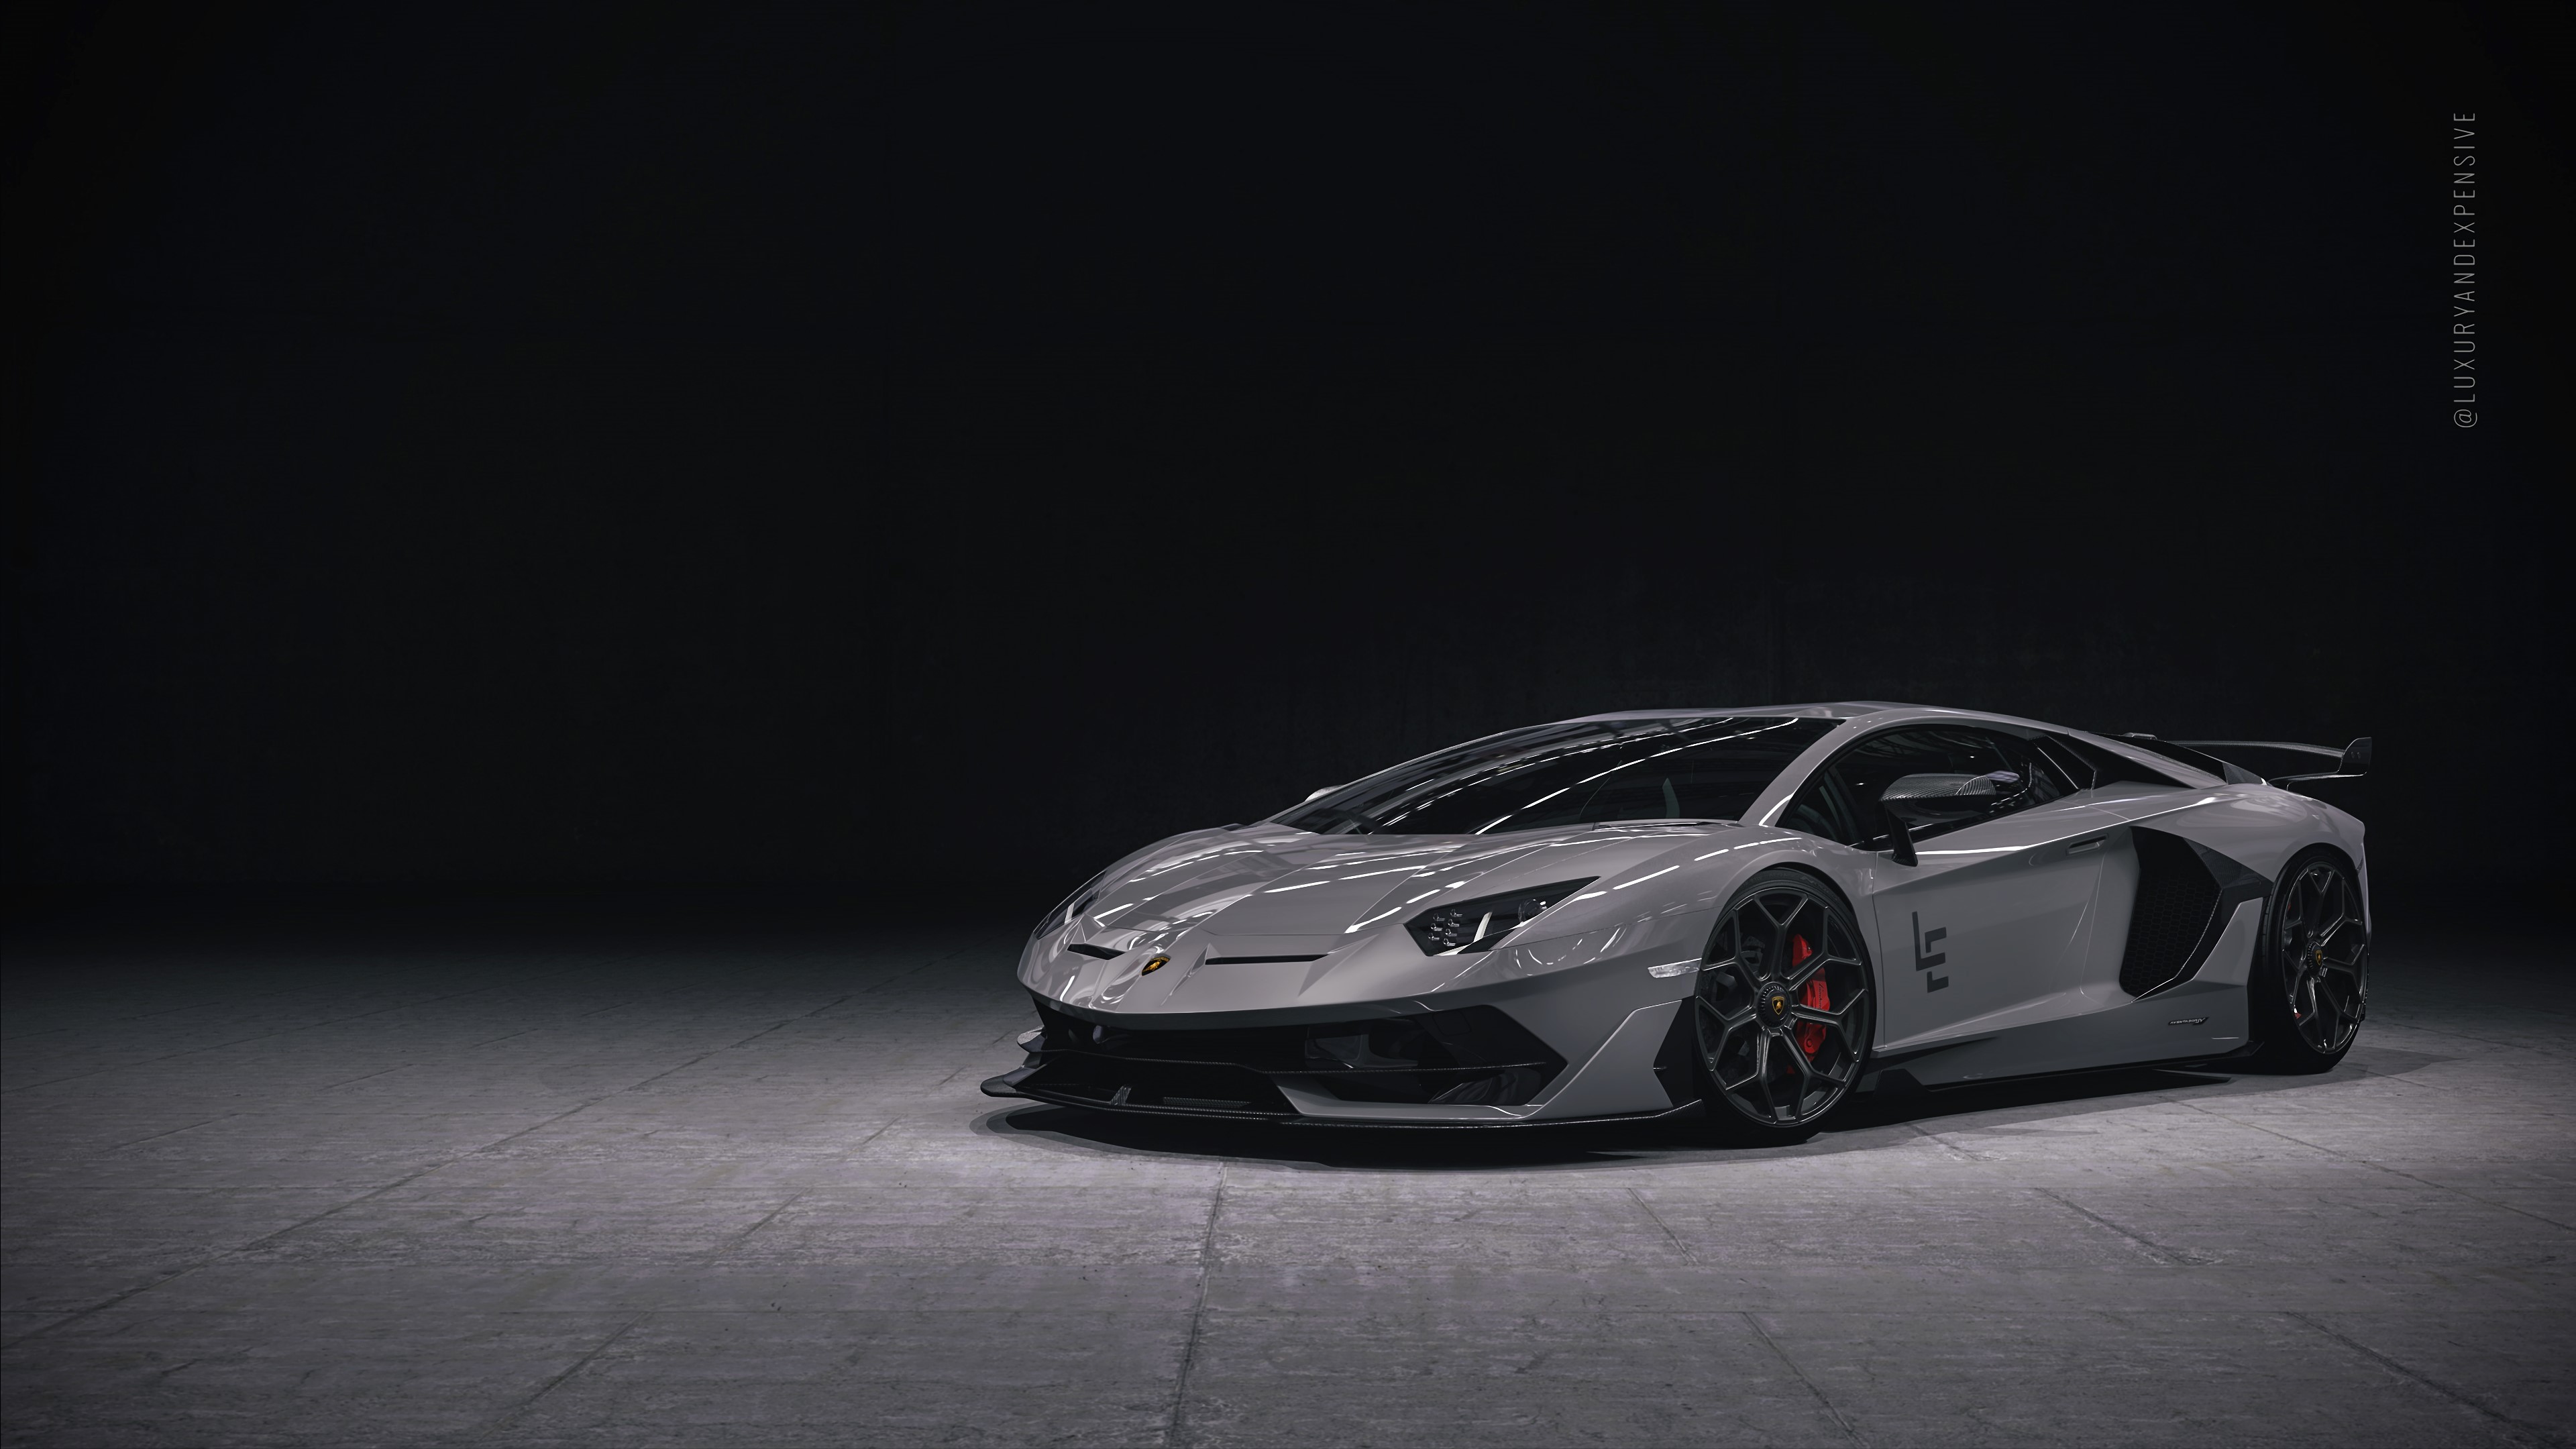 Télécharger des fonds d'écran Lamborghini Aventador Svj HD